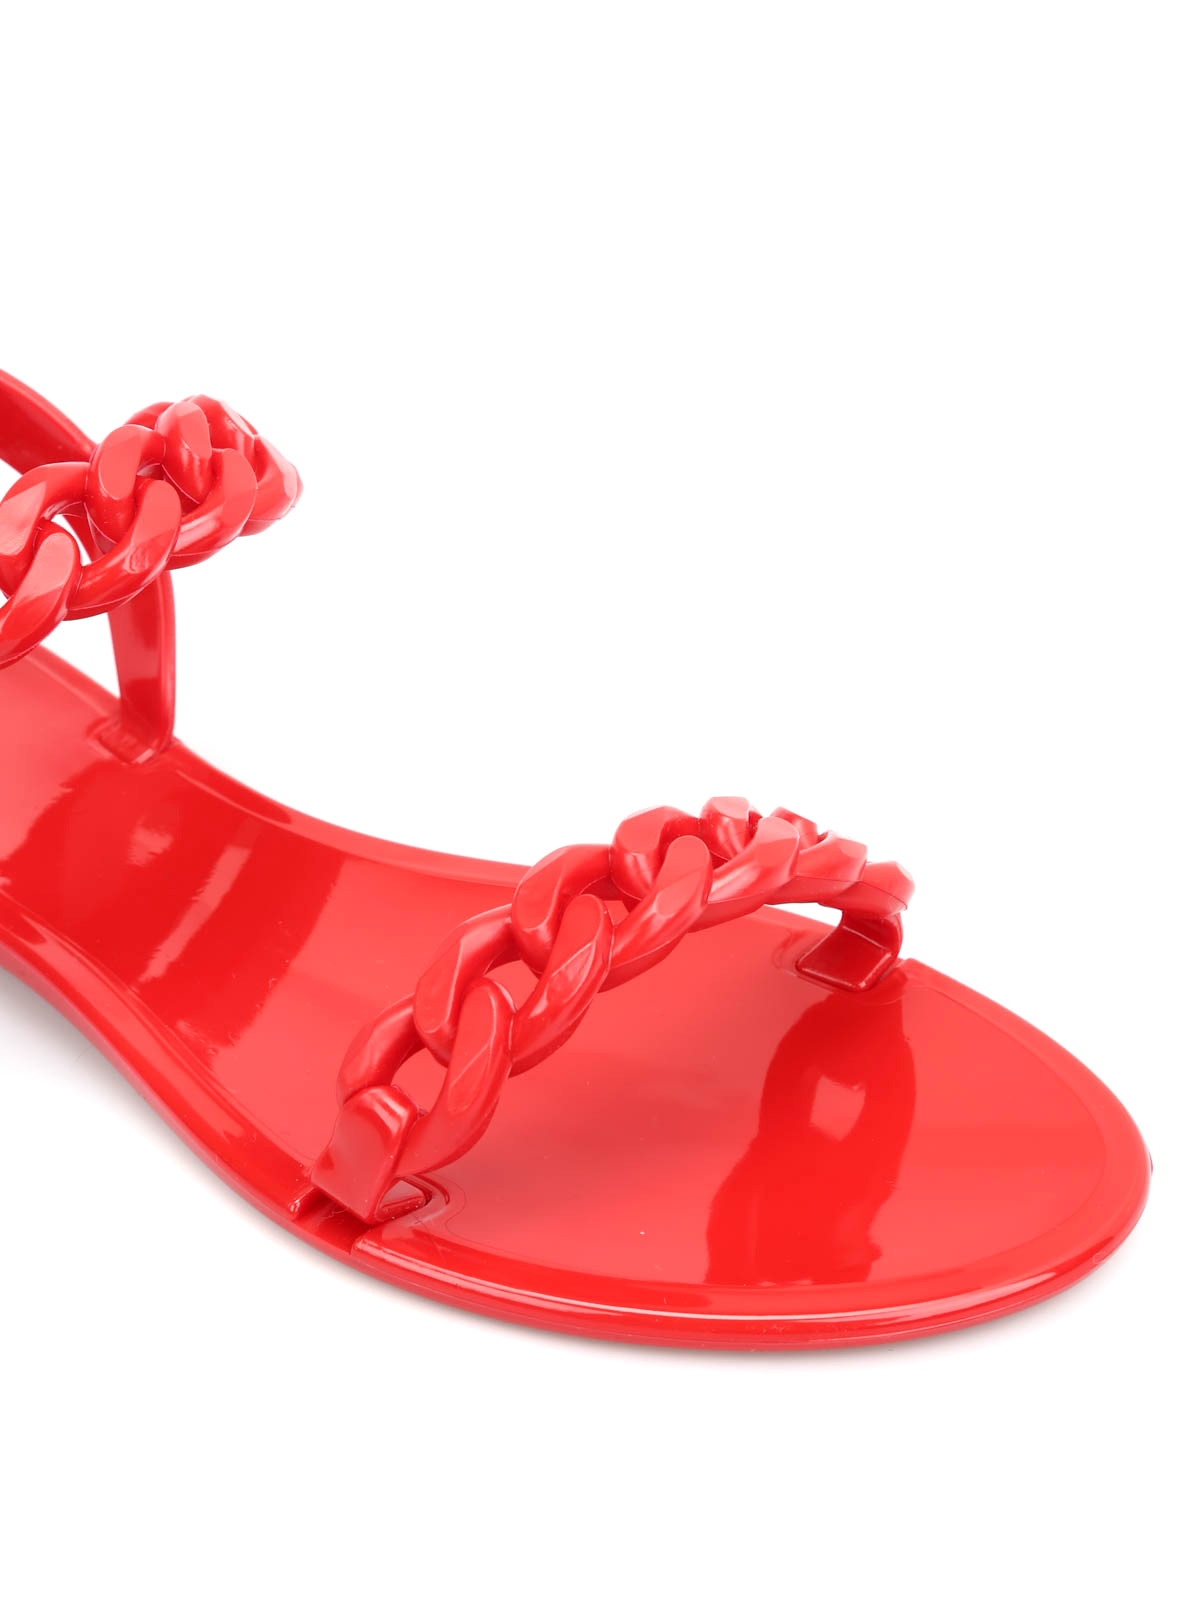 falsk symmetri tennis Sandals Givenchy - Jelly rubber sandals - BE08054026600 | iKRIX.com